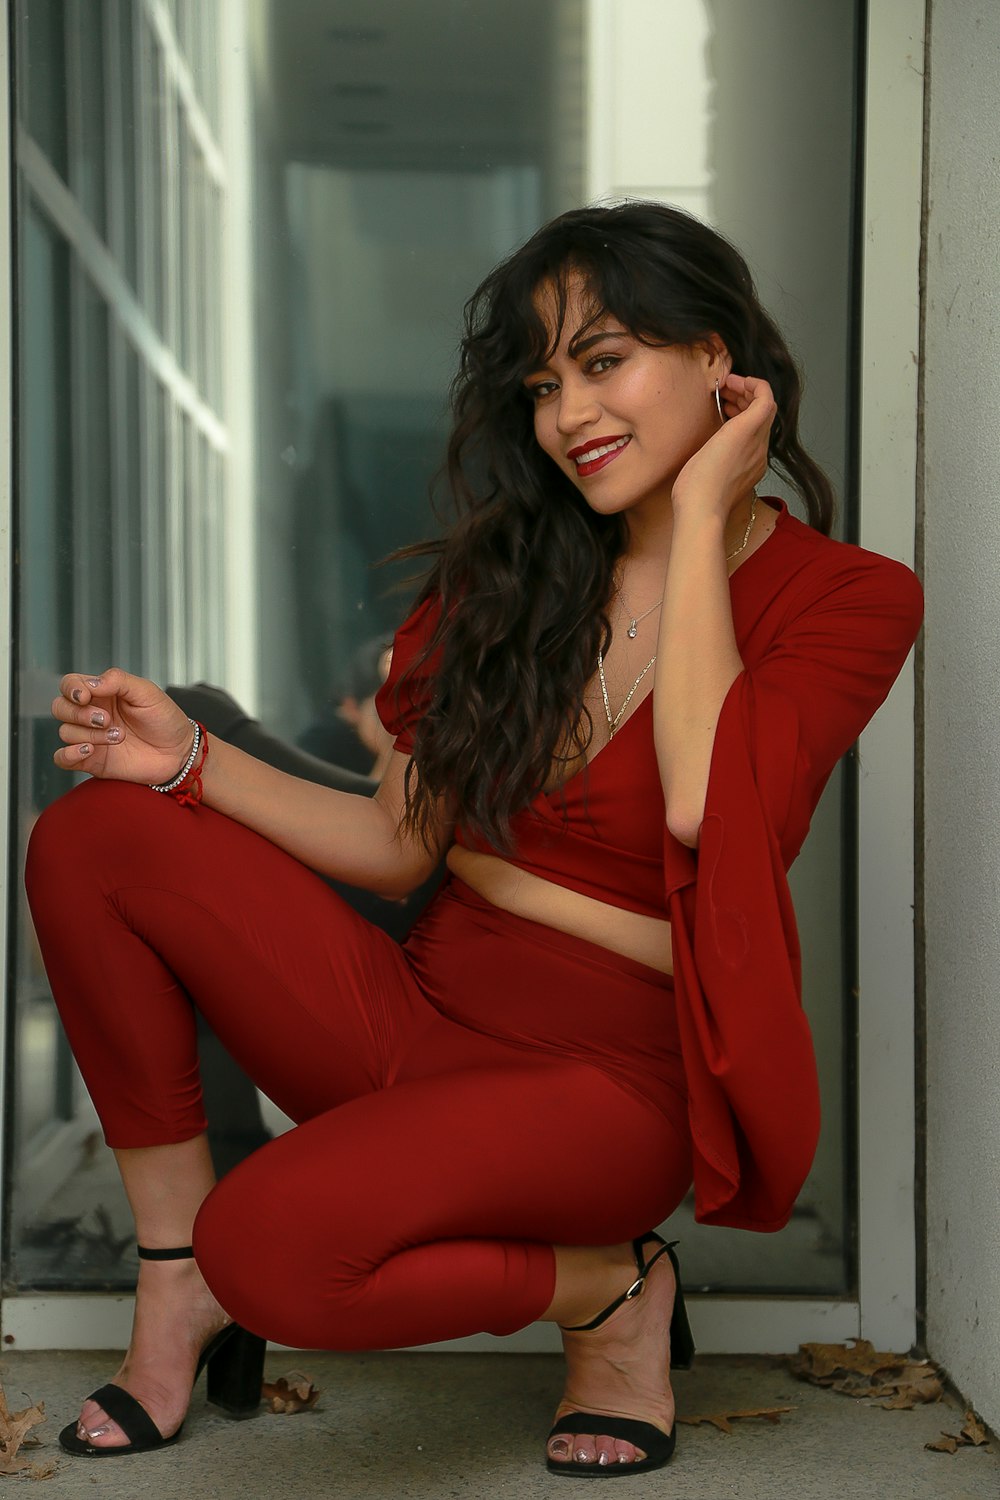 smiling woman wearing red dress